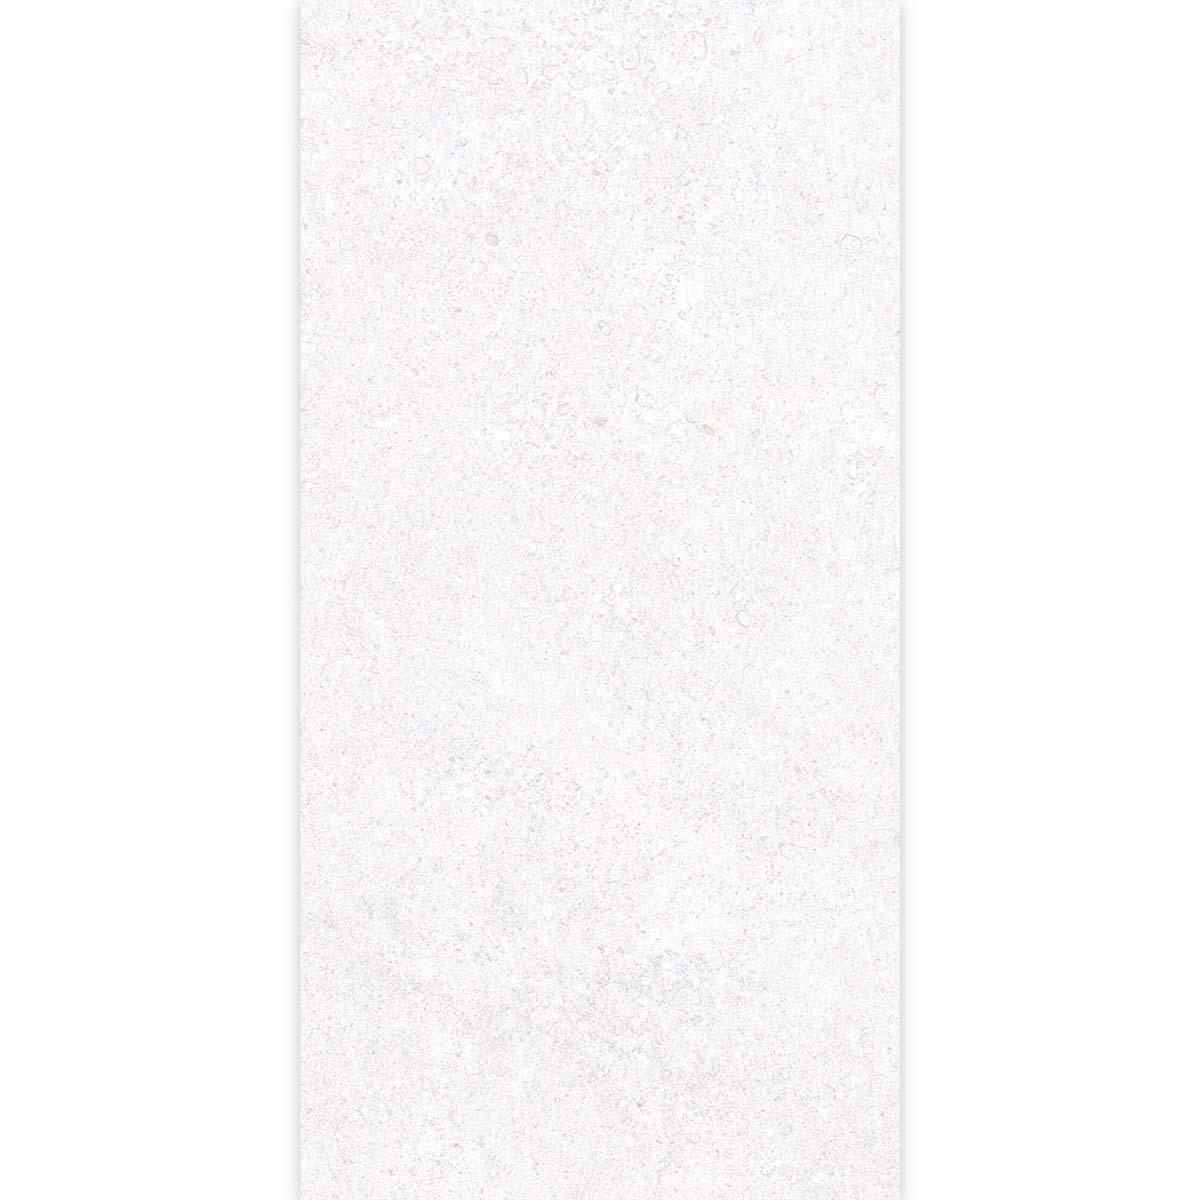 cluny white 20mm stone effect outdoor porcelain tile 50x100cm matt deluxe bathrooms ireland